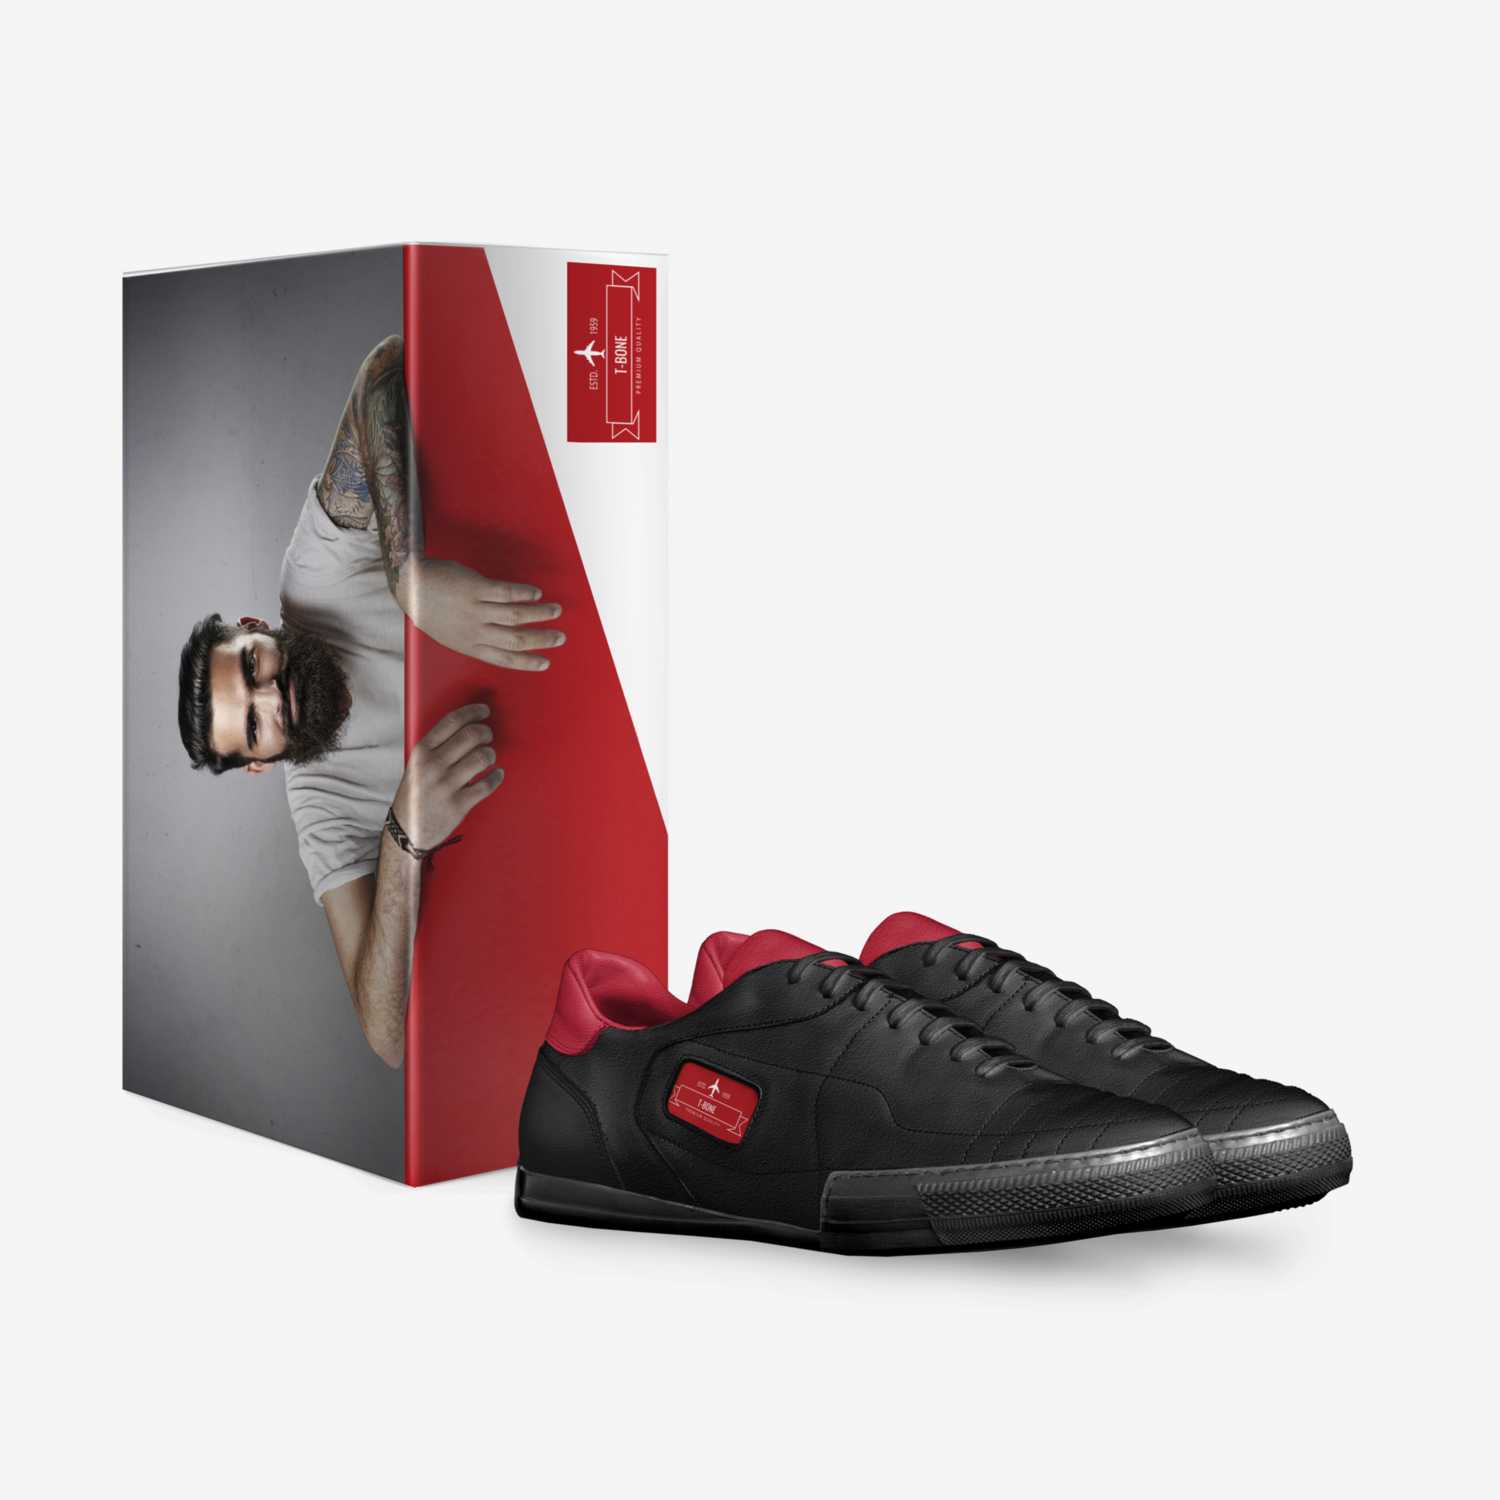 T-BONE custom made in Italy shoes by Joe Cabanas | Box view